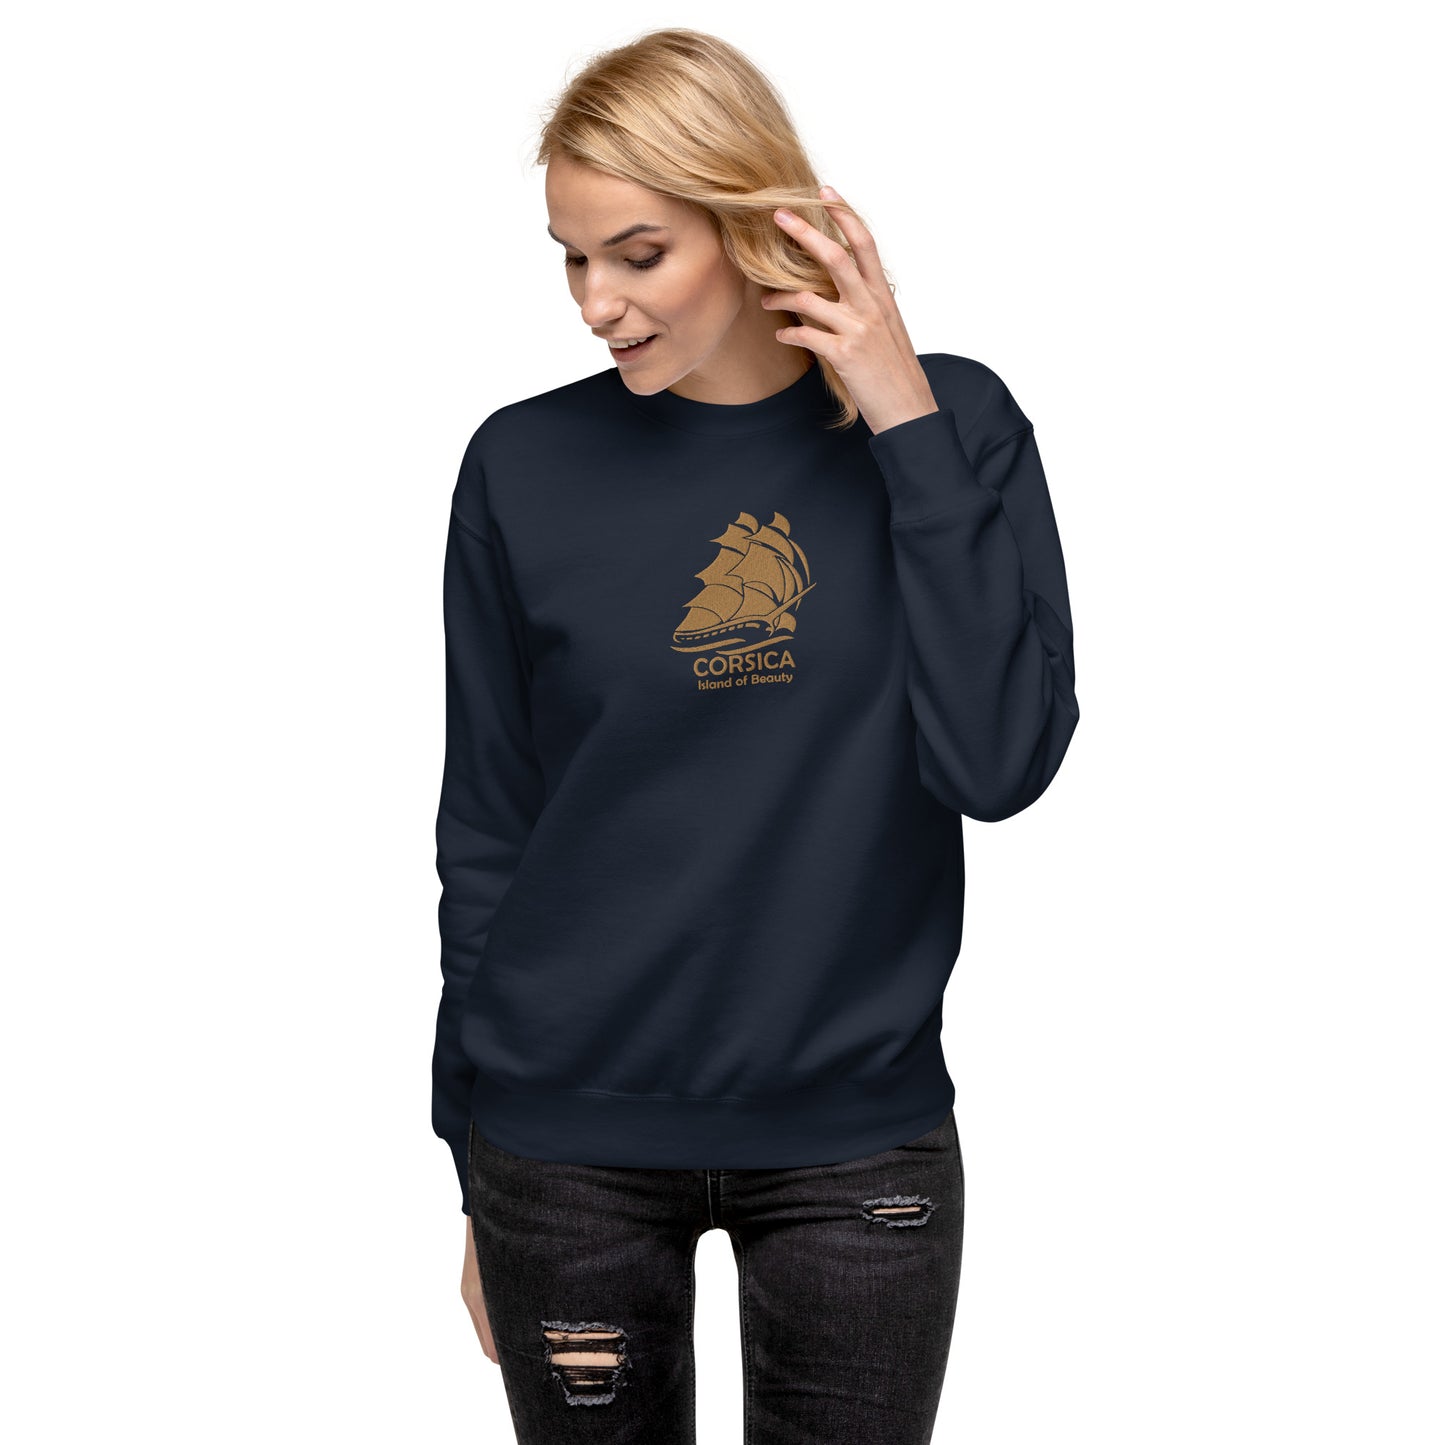 Sweatshirt premium Brodé Corsica Island Beauty